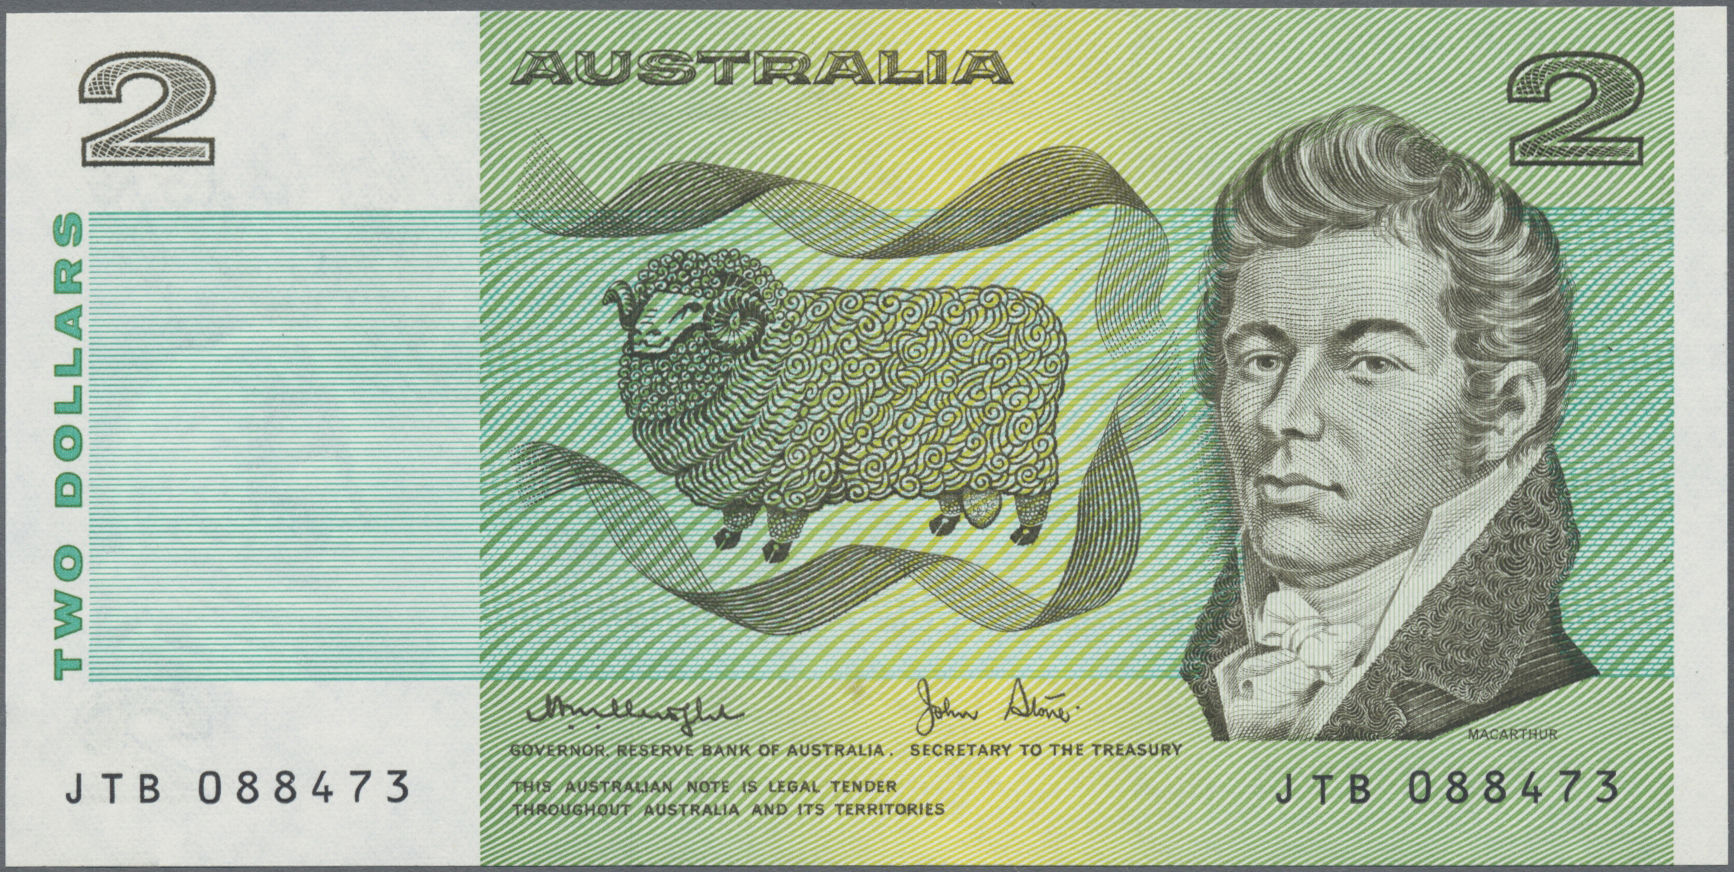 Lot 00065 - Australia / Australien | Banknoten  -  Auktionshaus Christoph Gärtner GmbH & Co. KG 55th AUCTION - Day 1